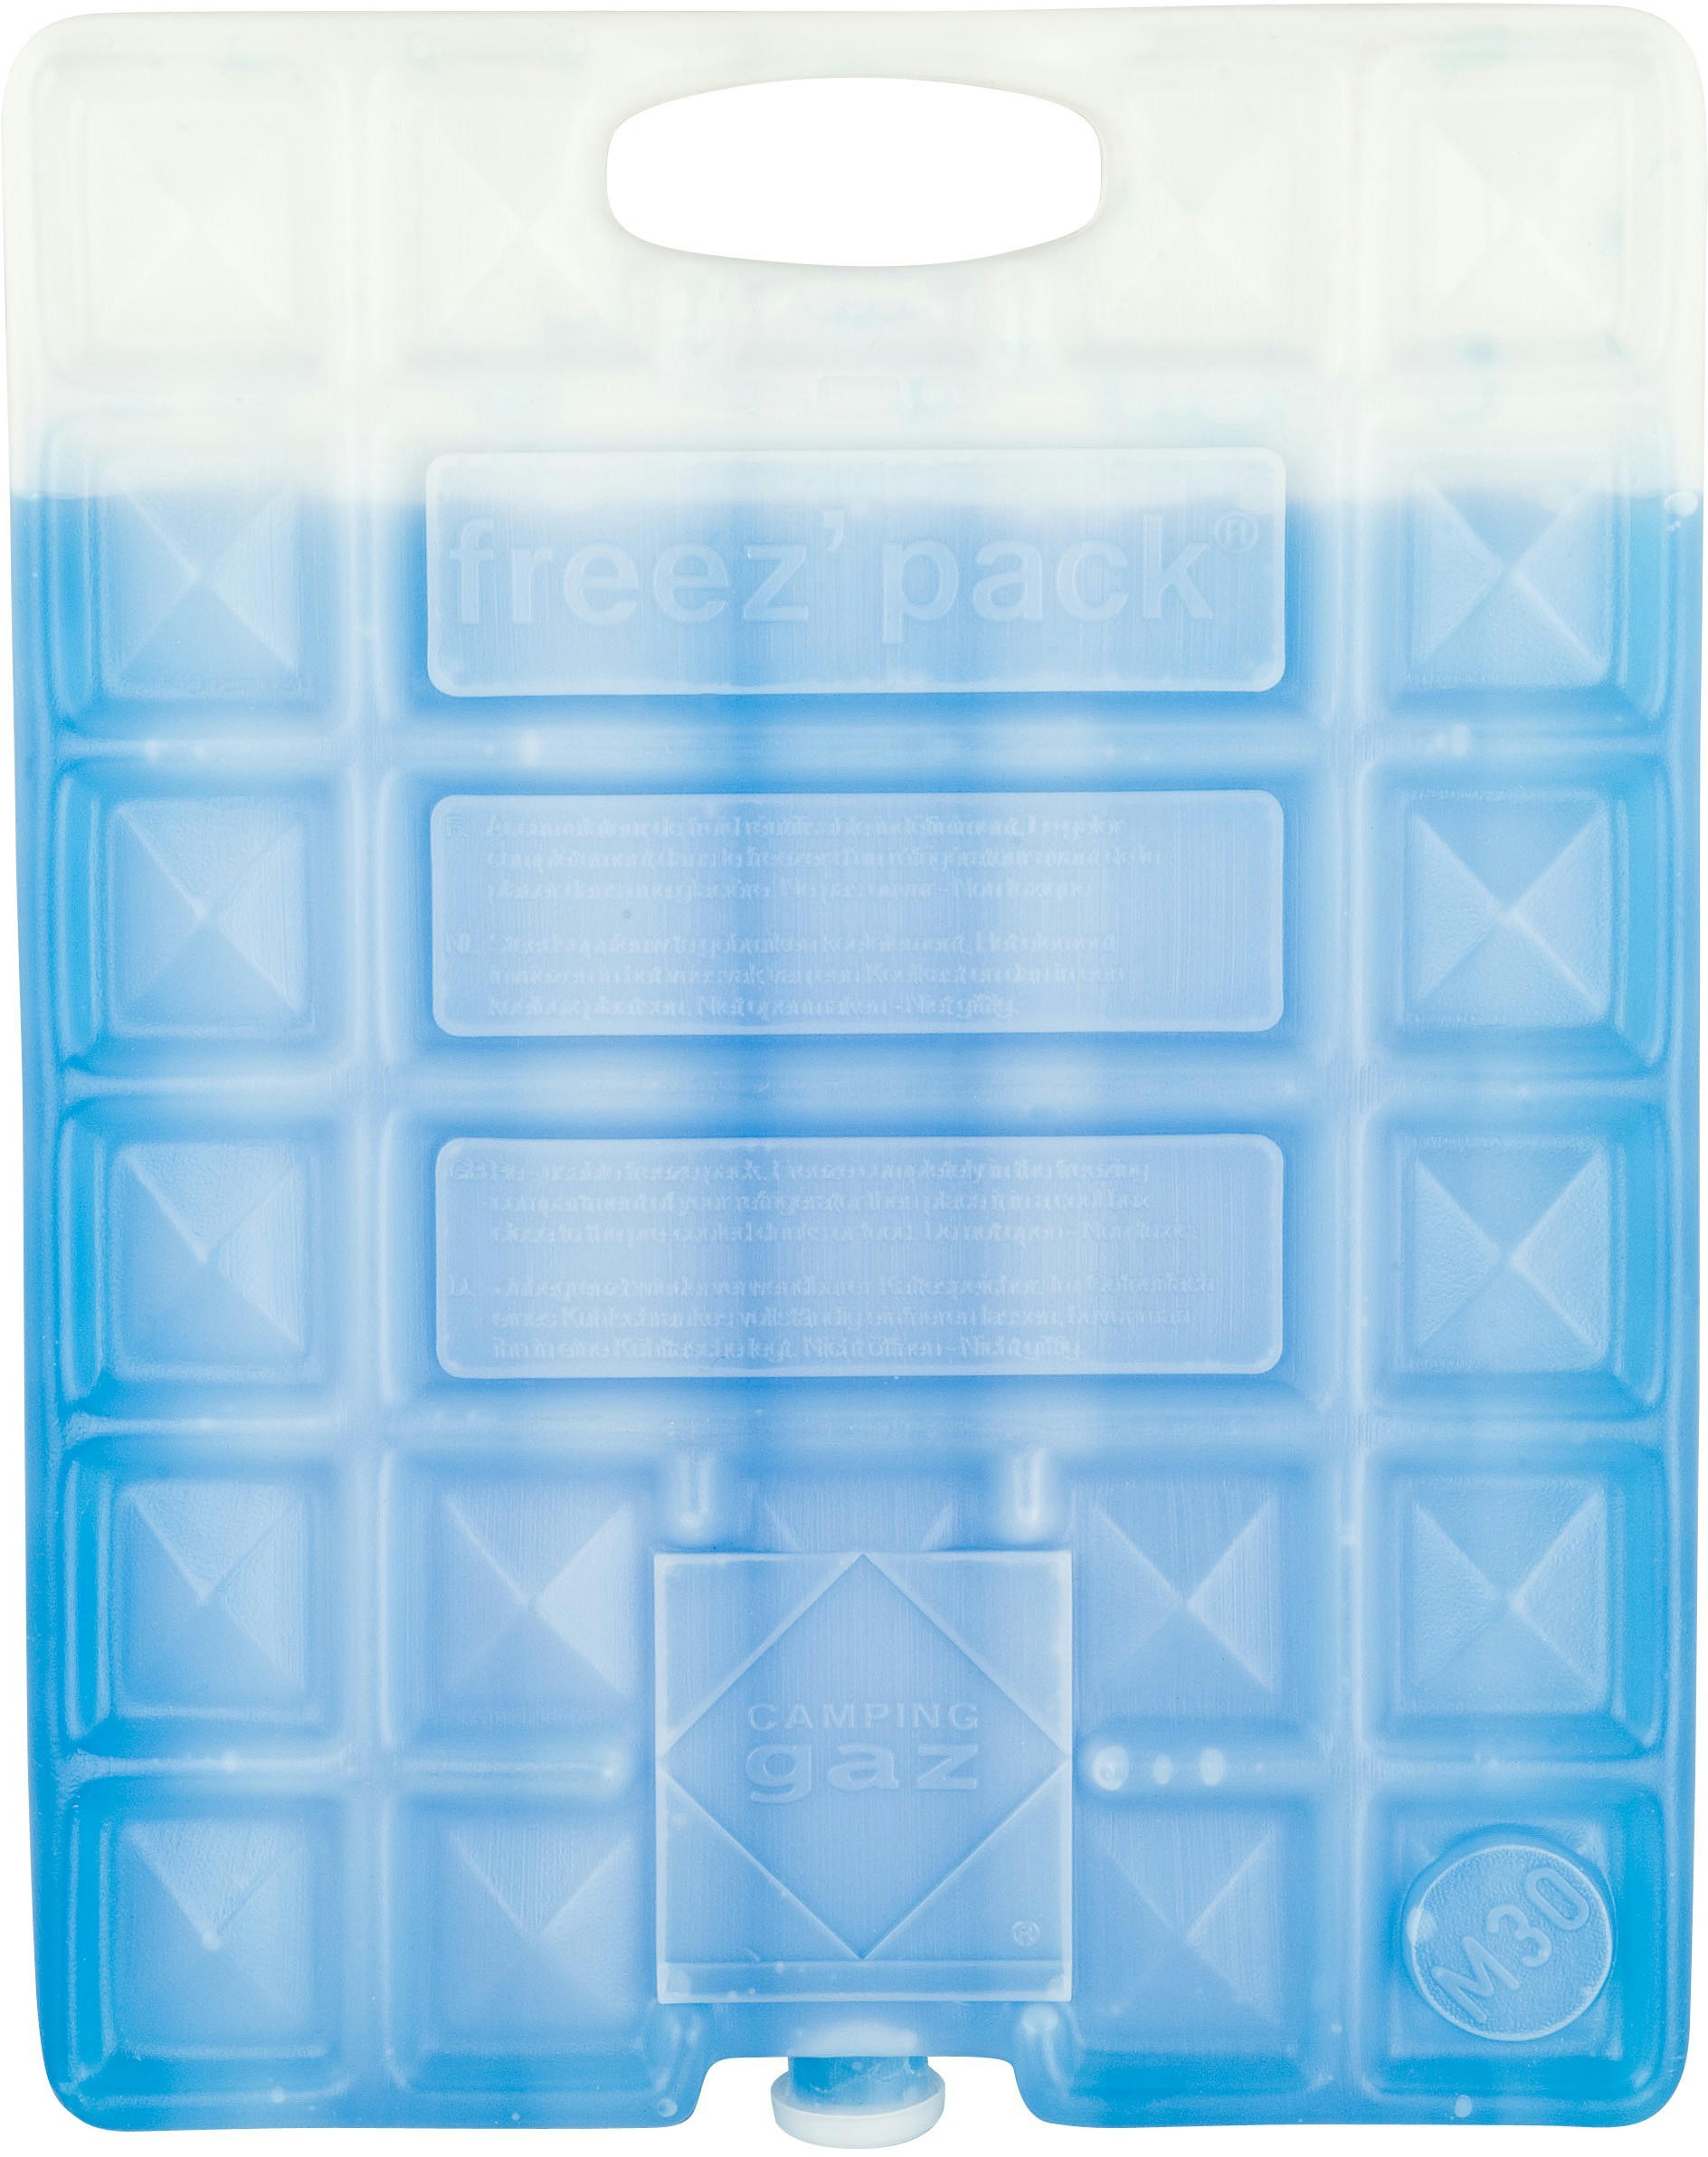 Аккумулятор холода Campingaz Freez'Pack M30, 1200г (216285) фото 2